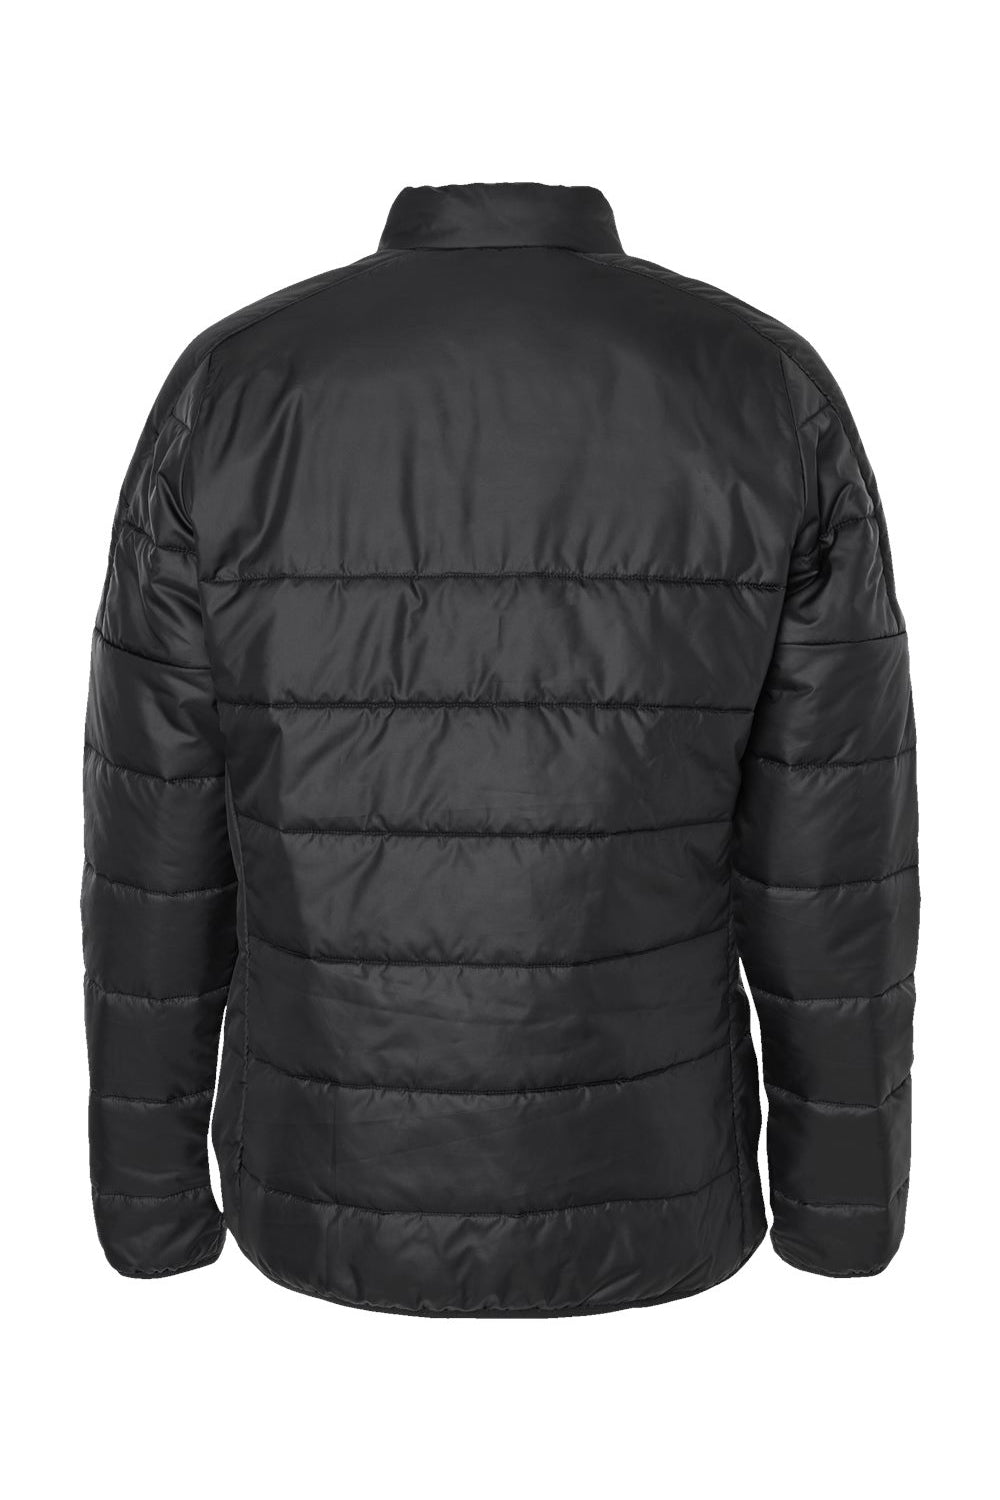 Adidas A571 Womens Full Zip Puffer Jacket Black Flat Back